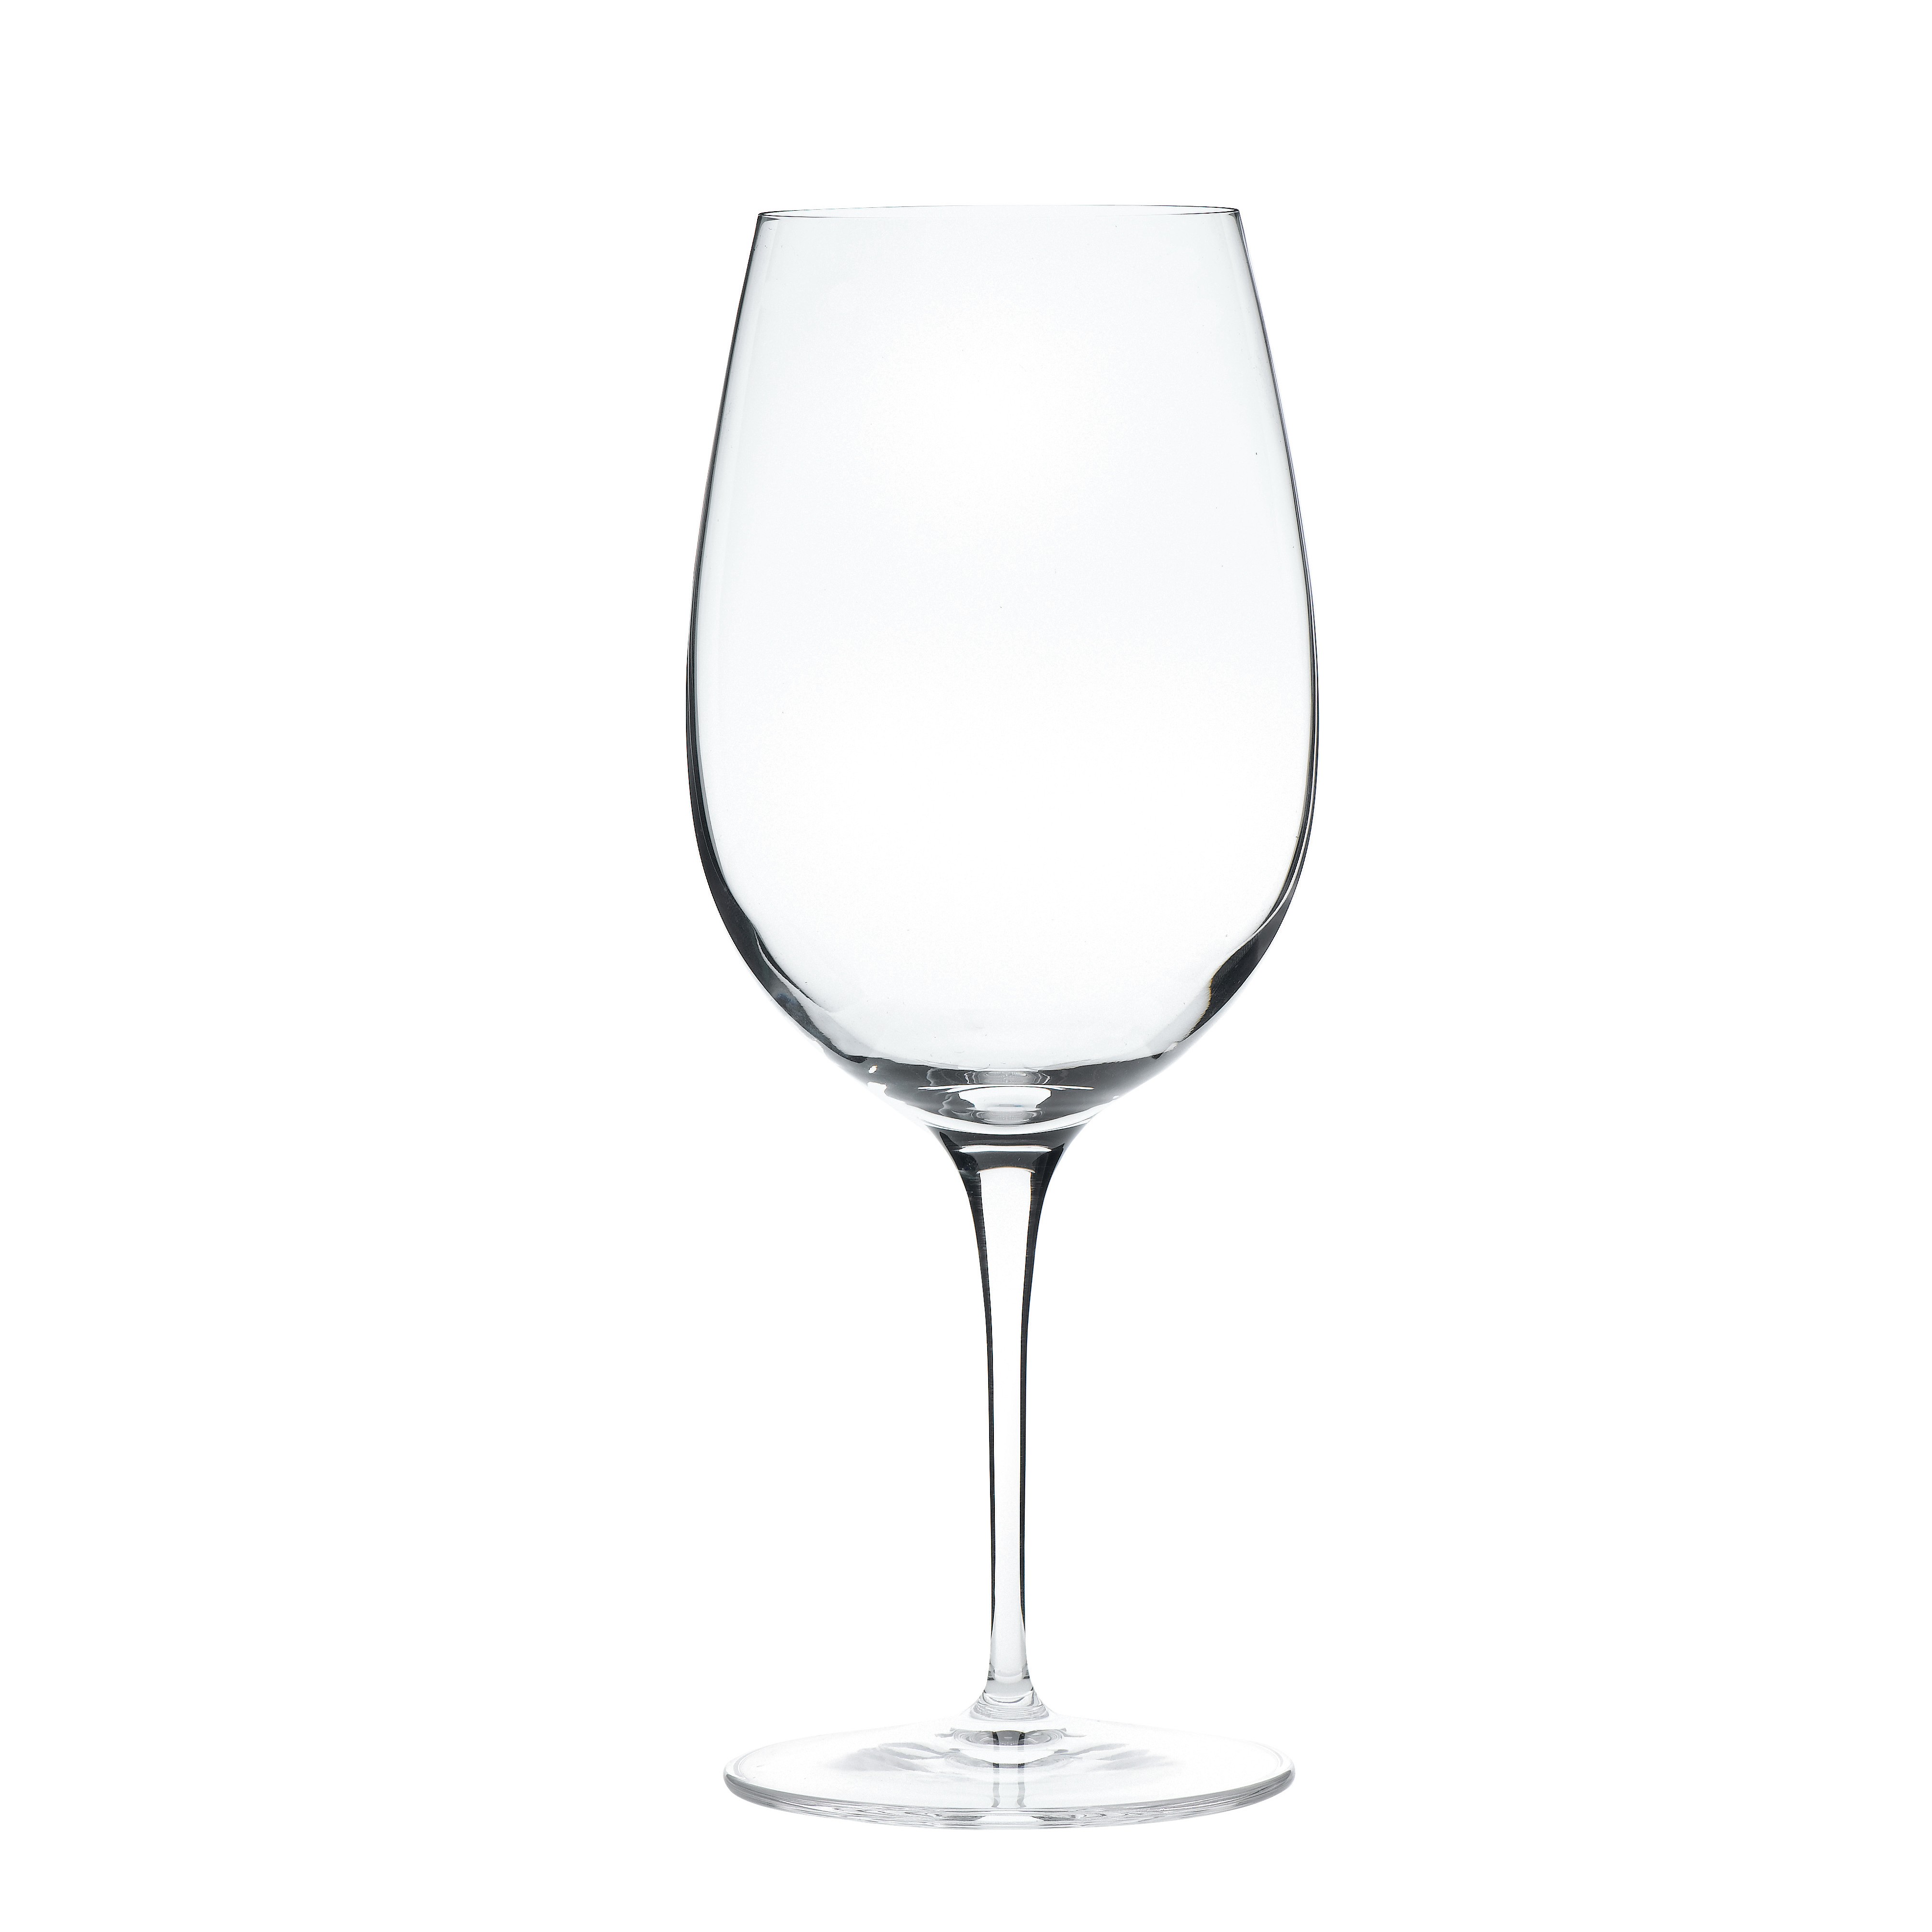 Vinoteque Riserva Wine Glasses 26.75oz / 76cl 